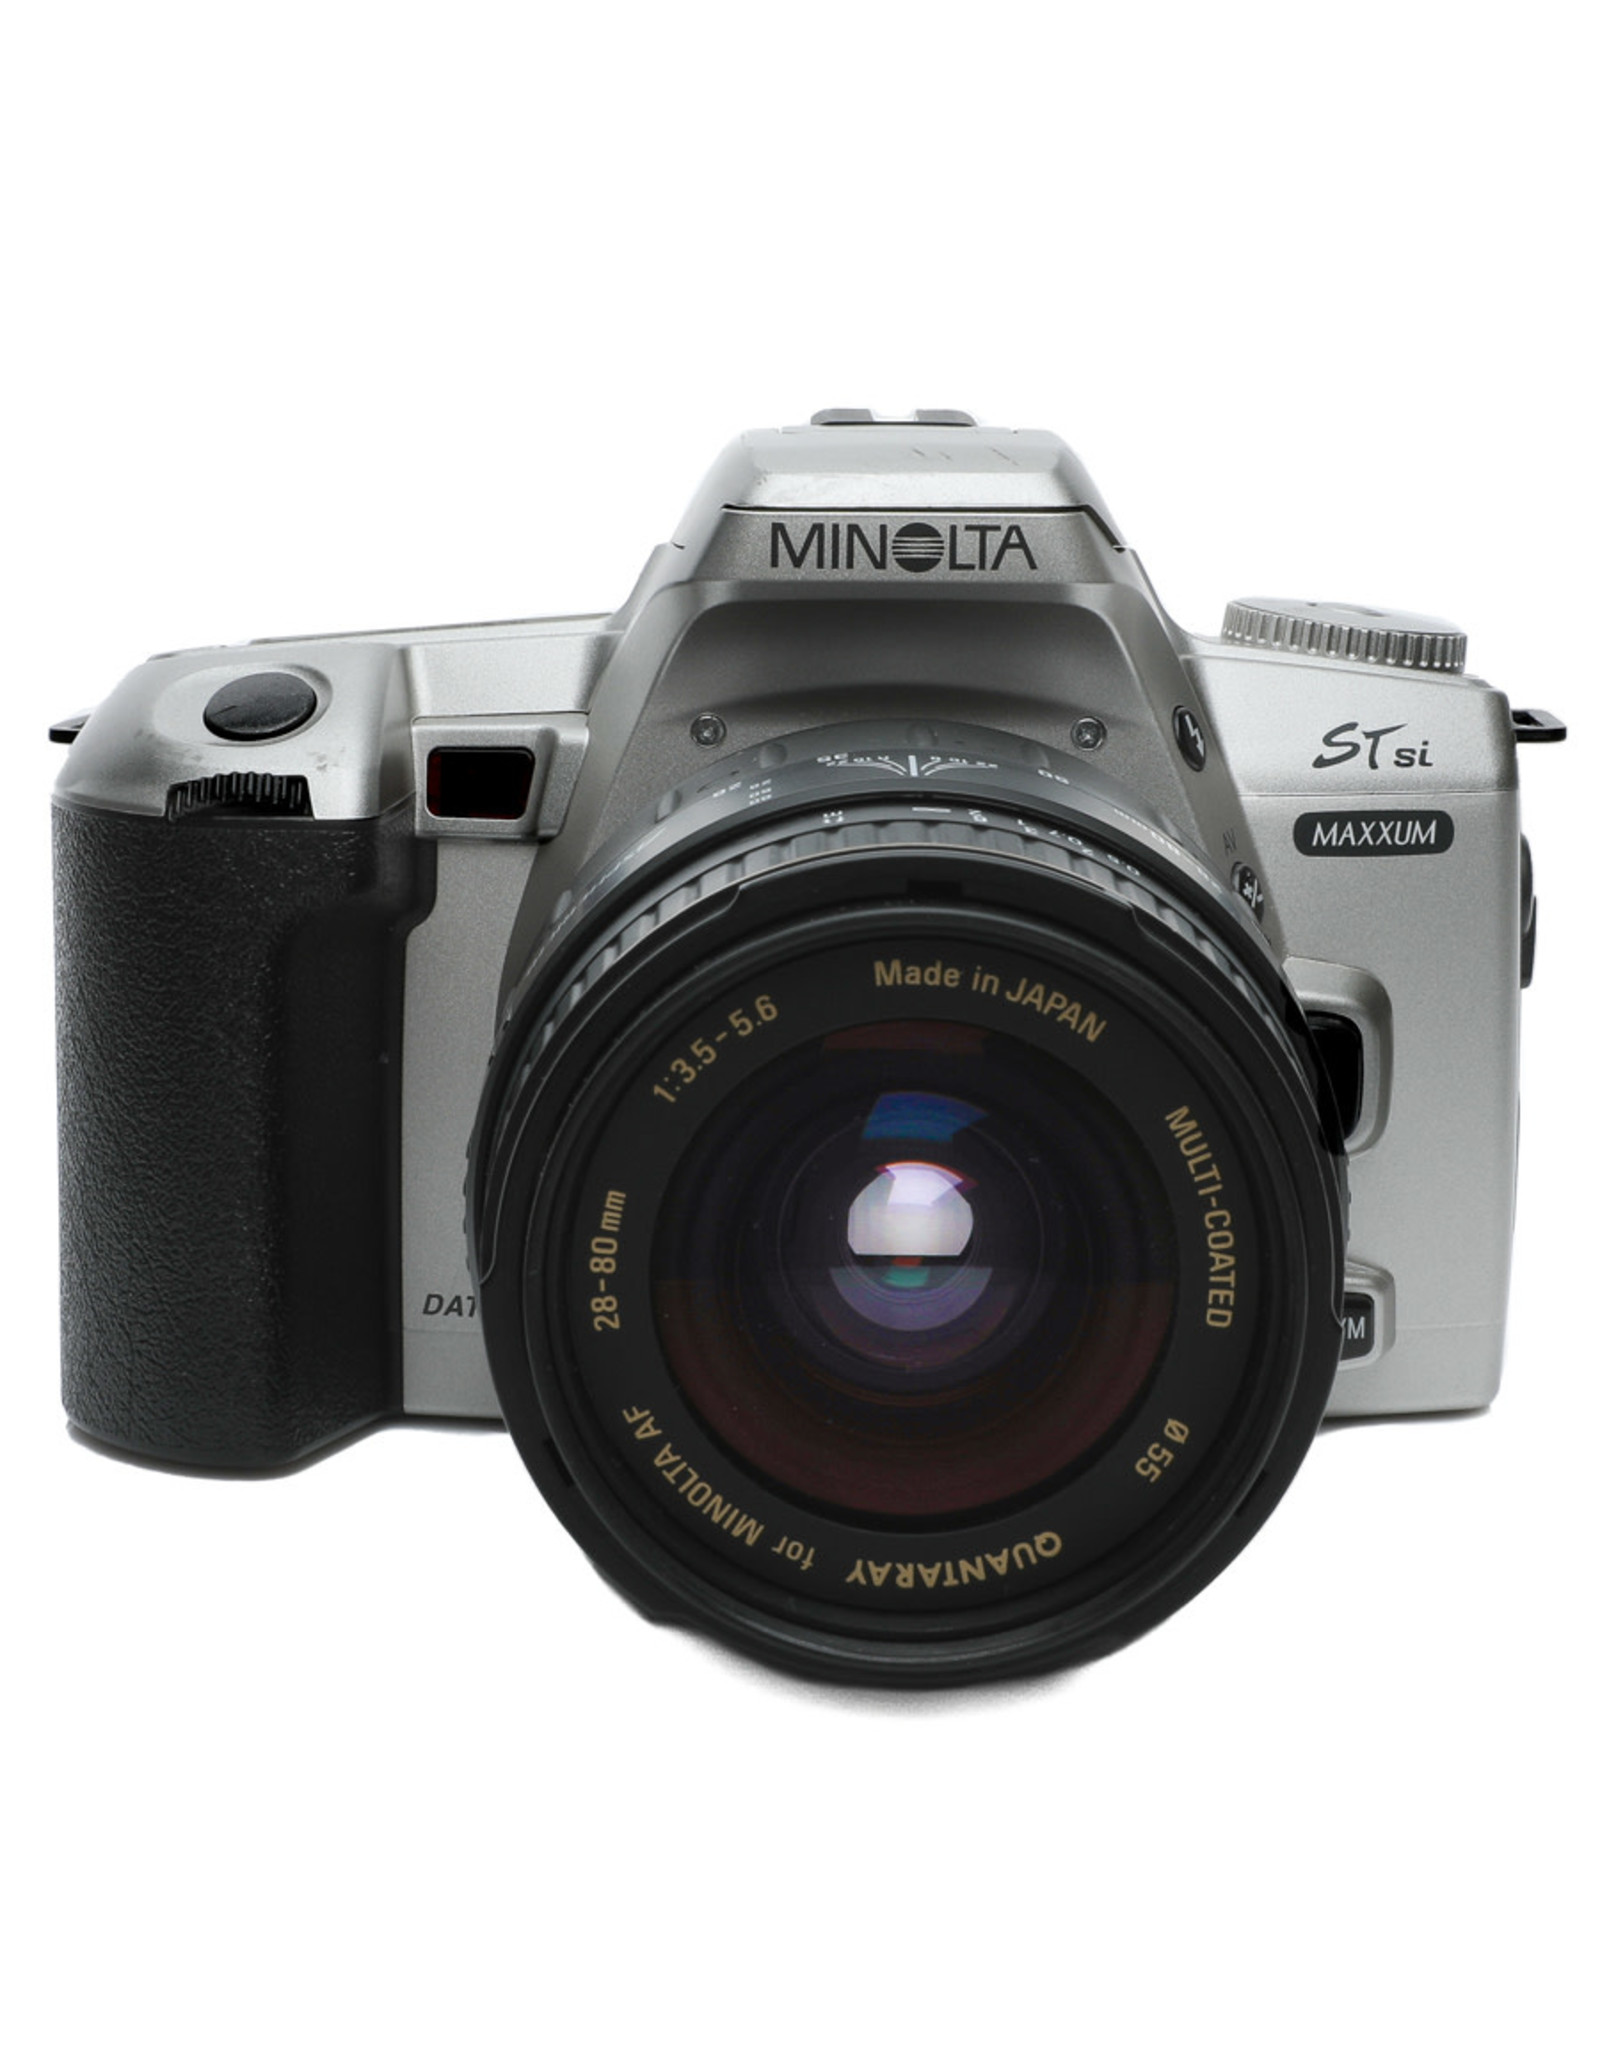 Minolta Minolta Maxxum HTsi w/28-100mm AF Lens Semester Rental 2